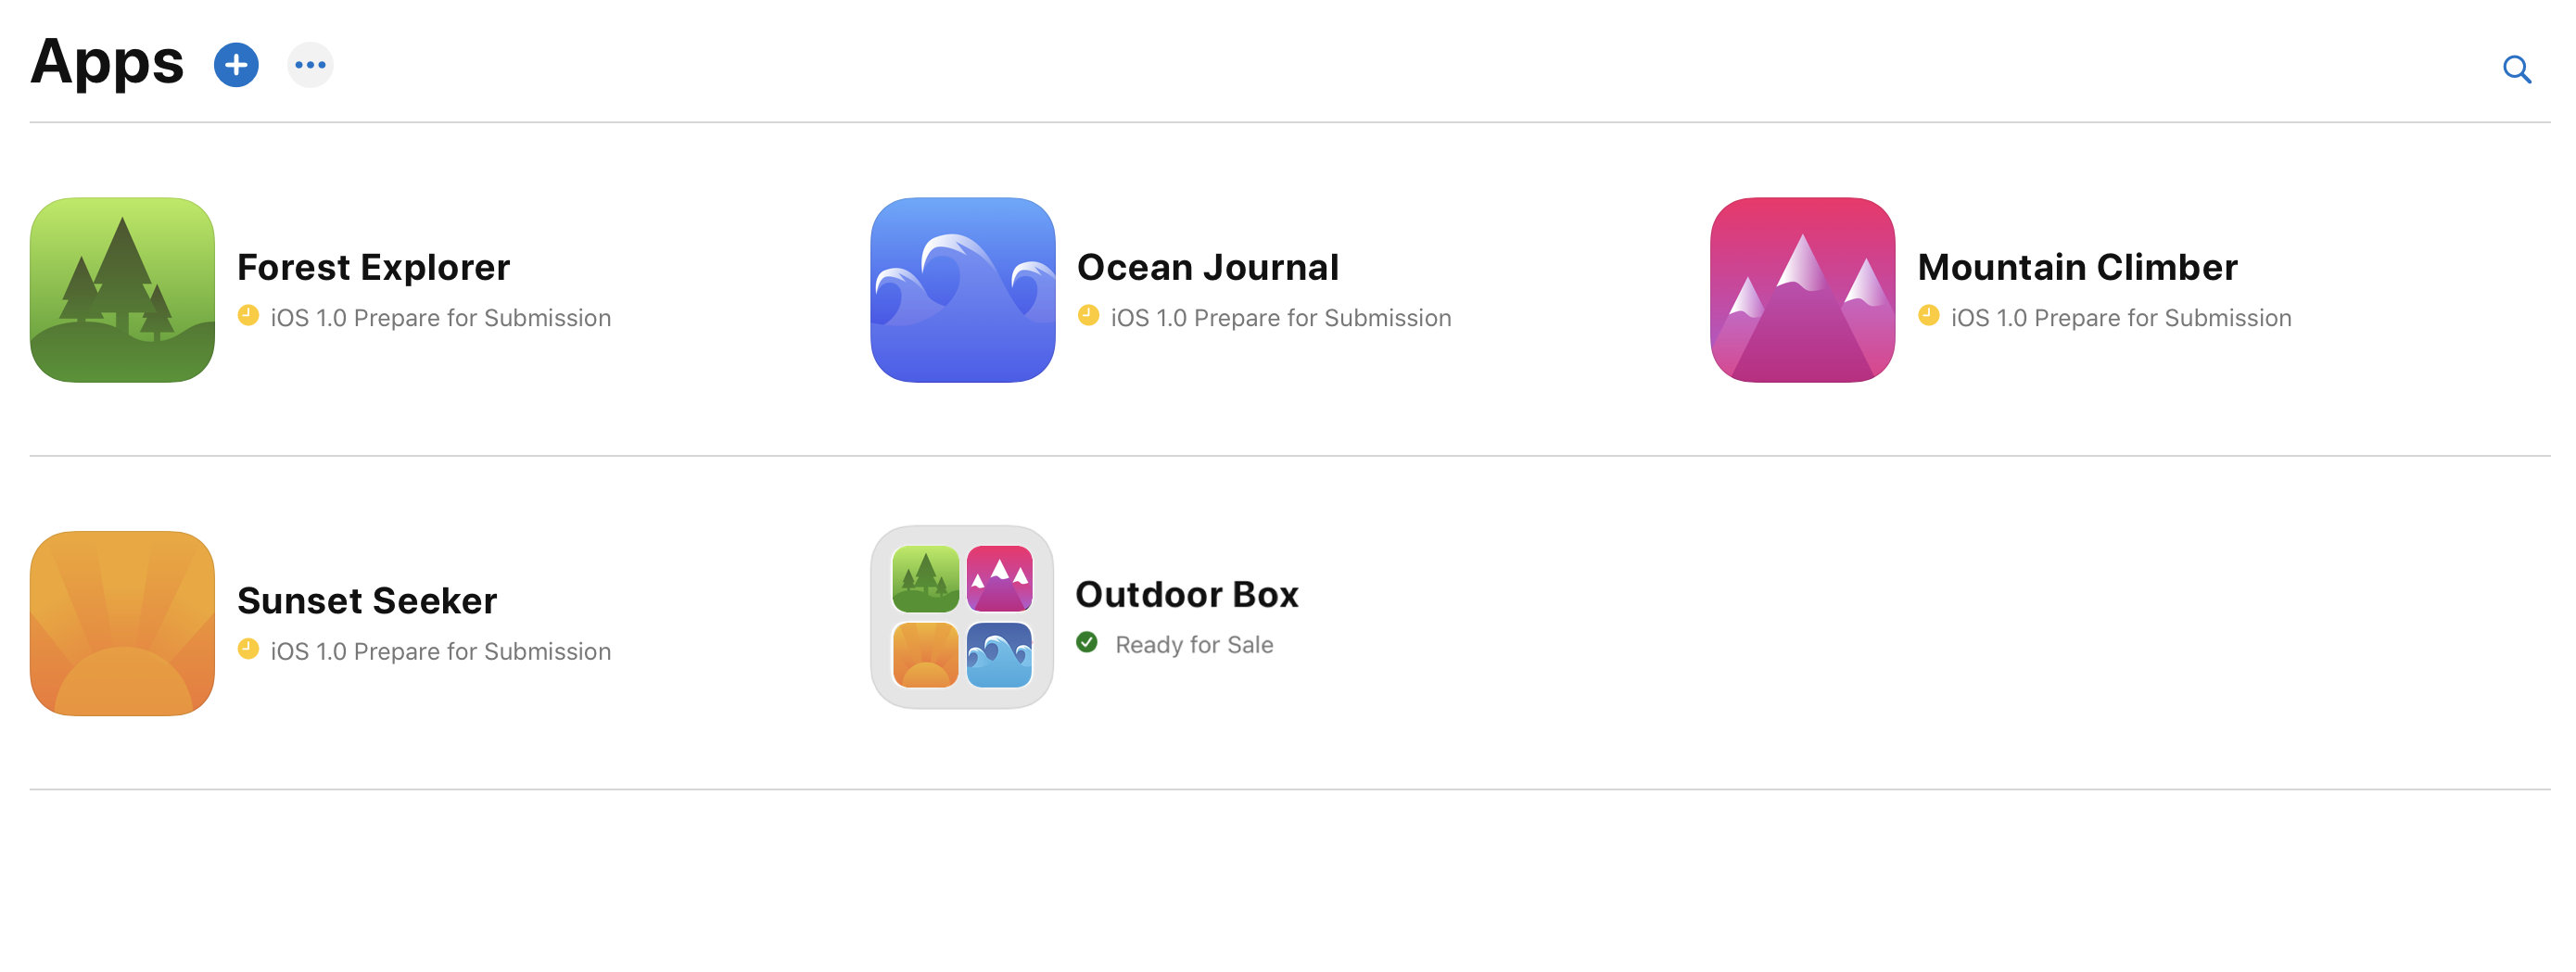 “App”页面中显示了 4 个 App 和 1 个 App 套装。